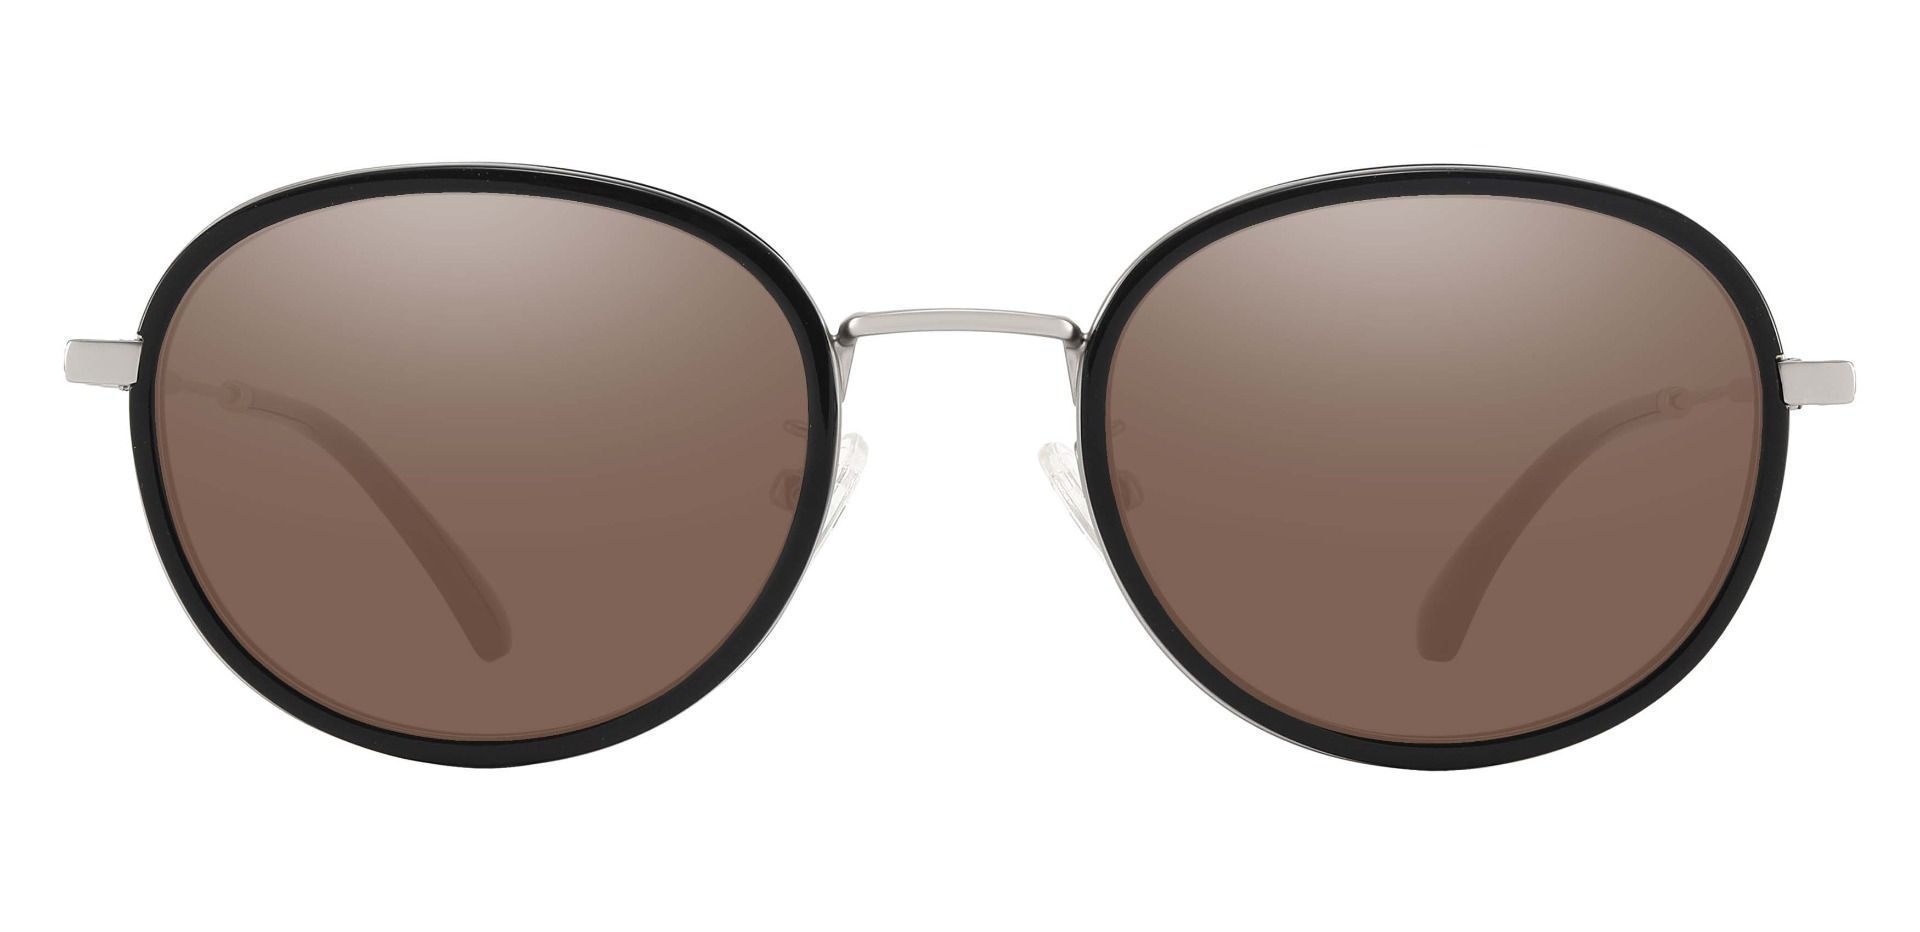 Edmore Oval Prescription Sunglasses - Black Frame With Brown Lenses